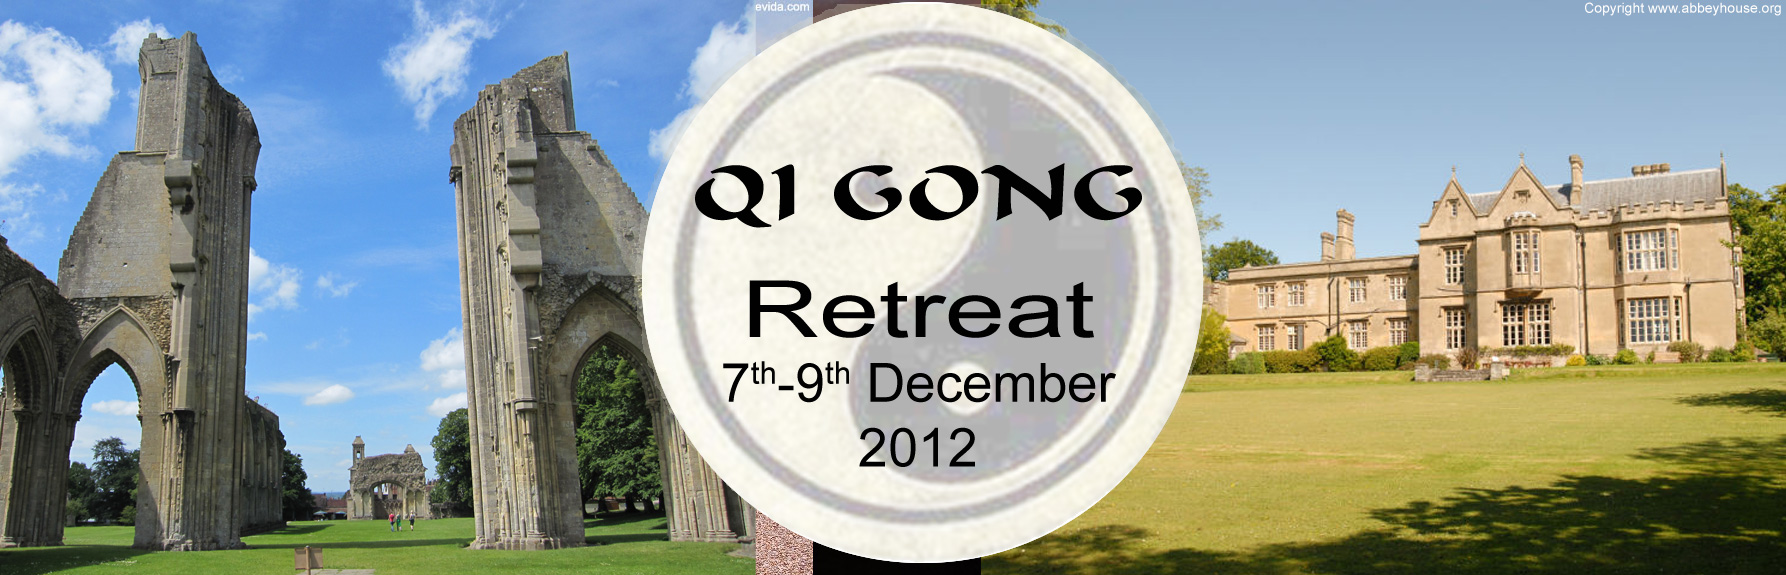 QI GONG RETREAT 7th - 9th December 2012